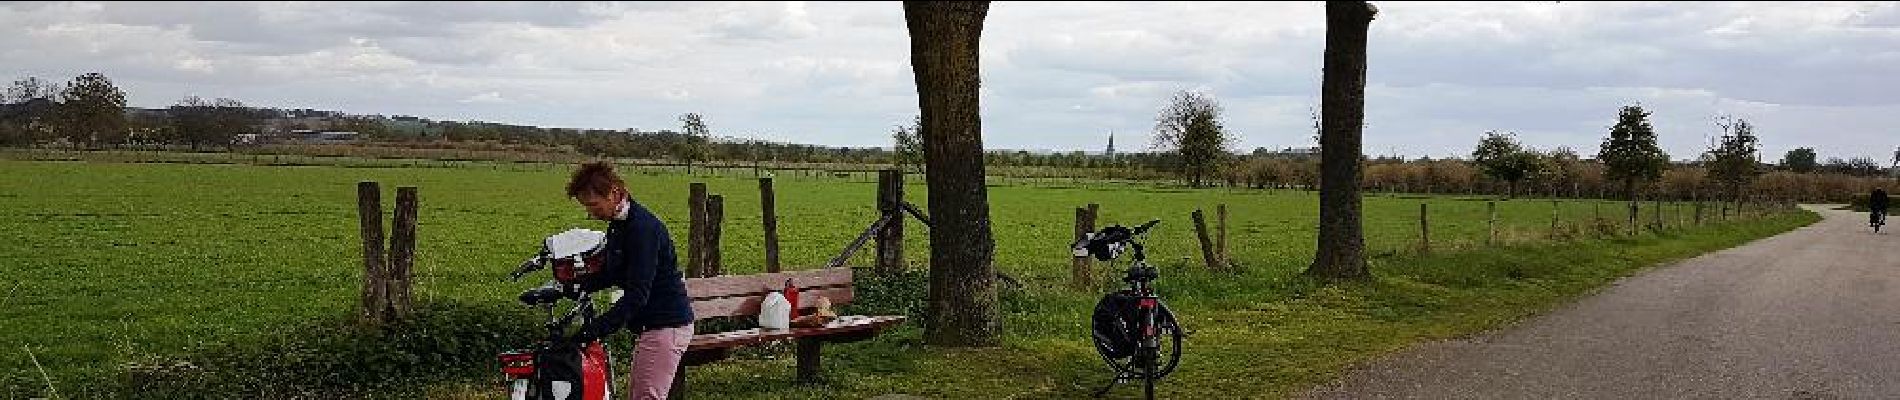 POI Eijsden-Margraten - picknick - Photo